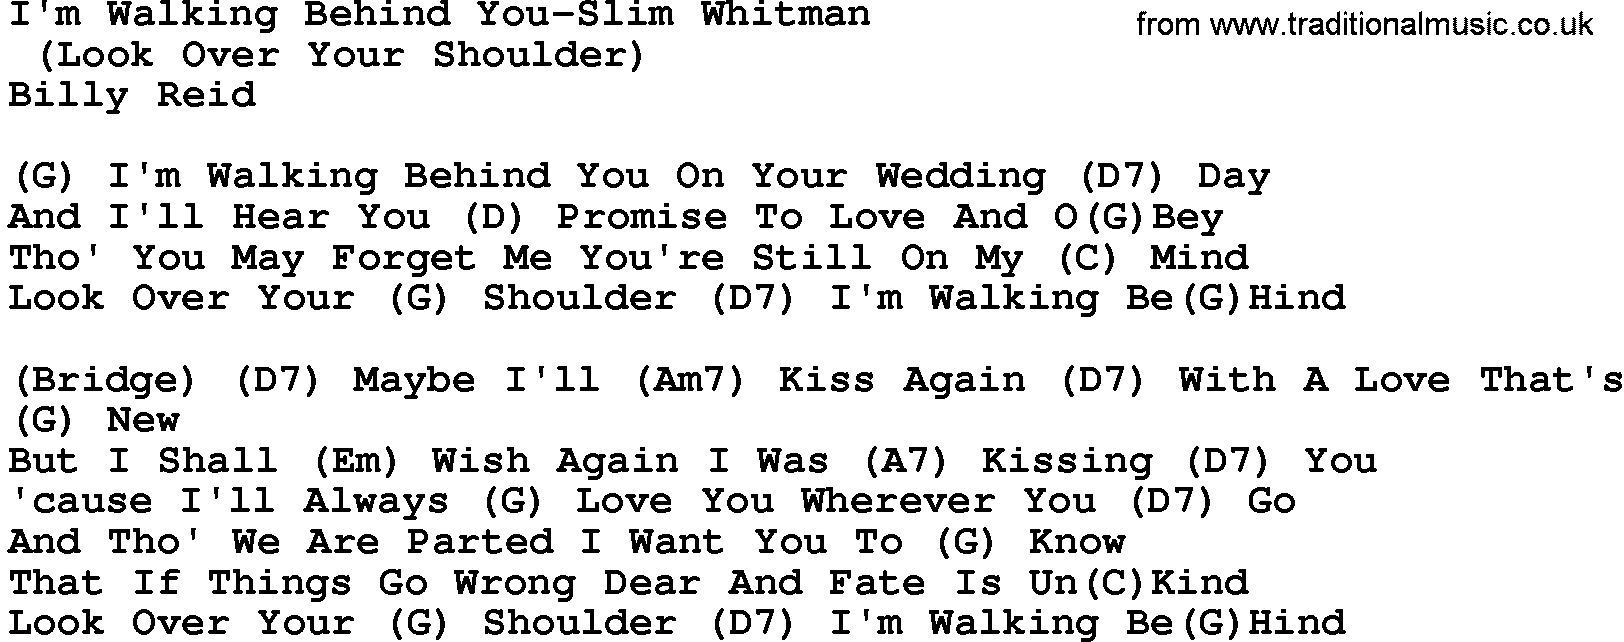 Country music song: I'm Walking Behind You-Slim Whitman lyrics and chords